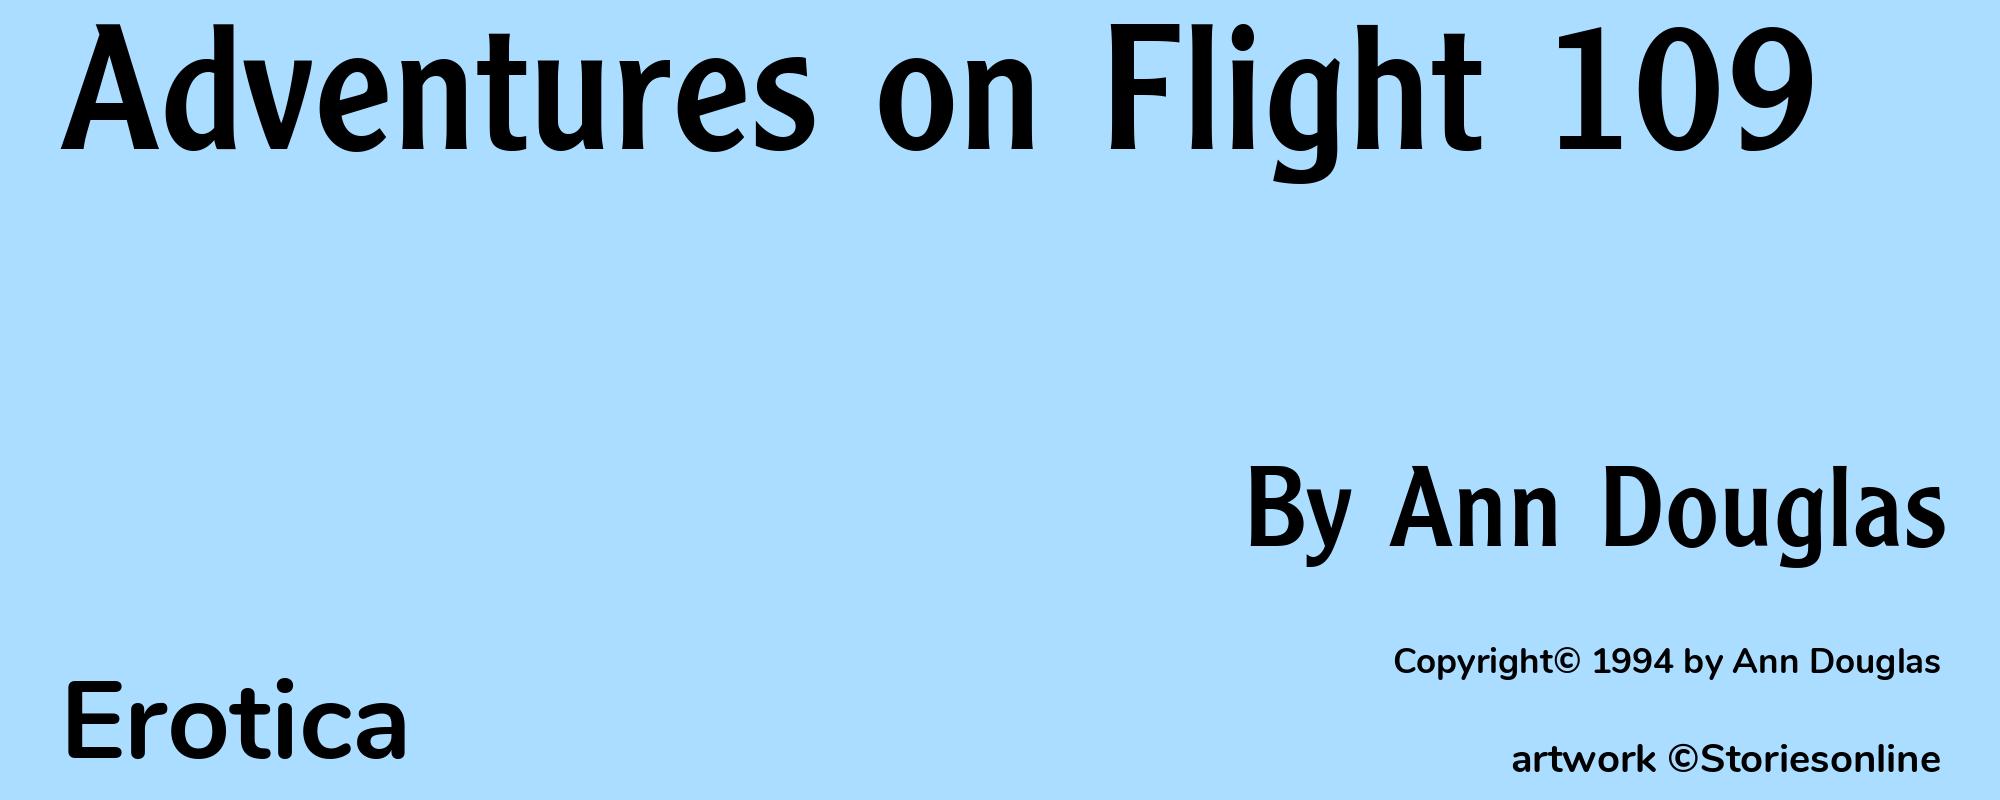 Adventures on Flight 109 - Cover